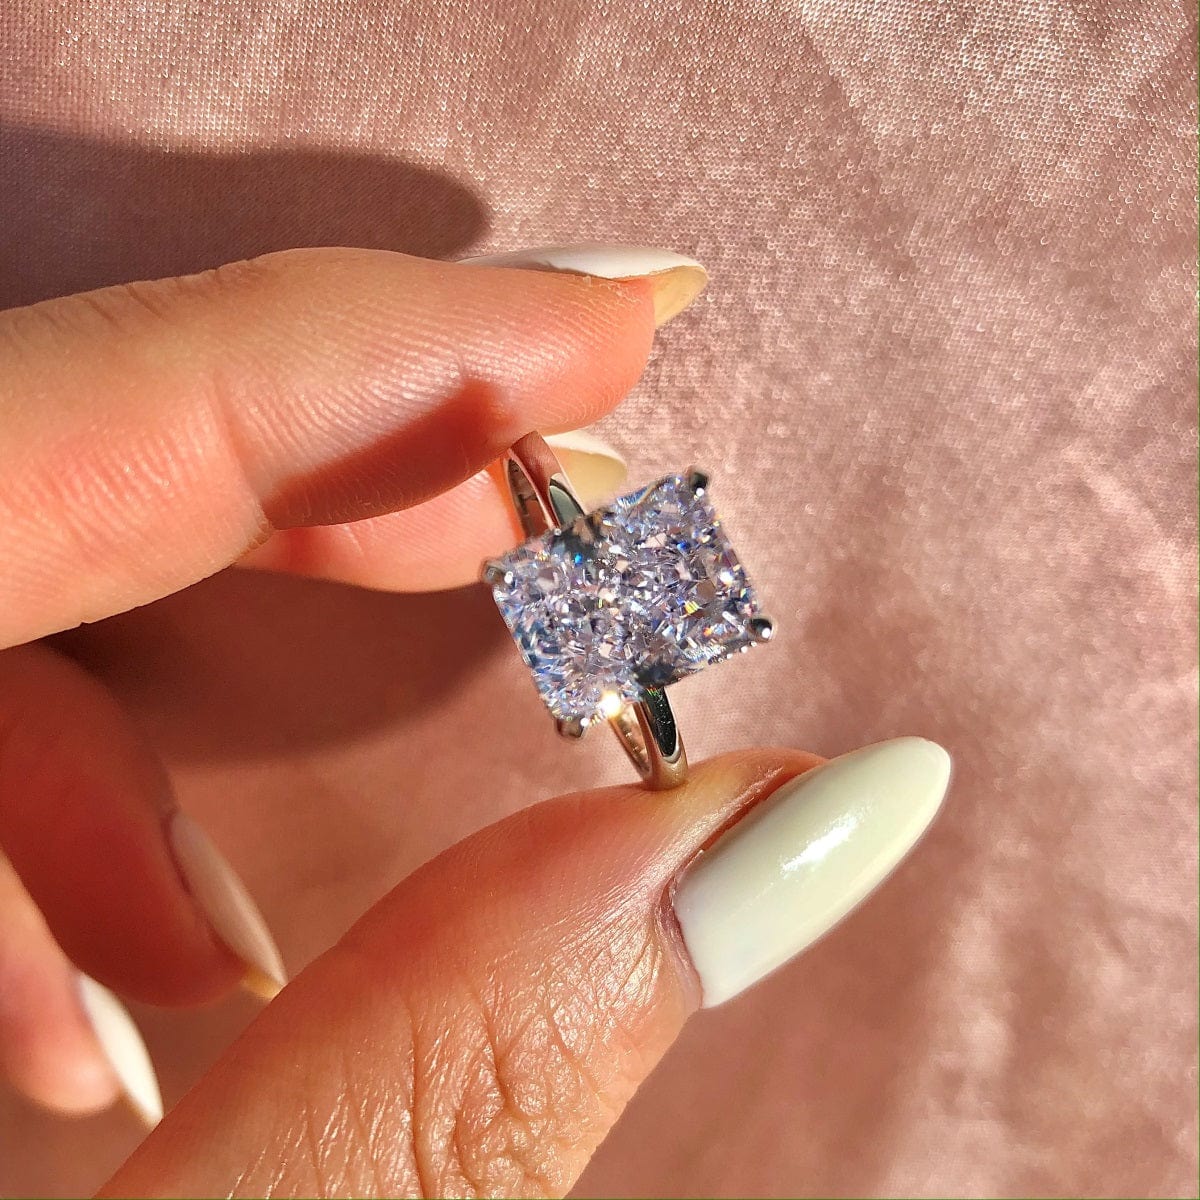 Aura princess-cut diamond ring